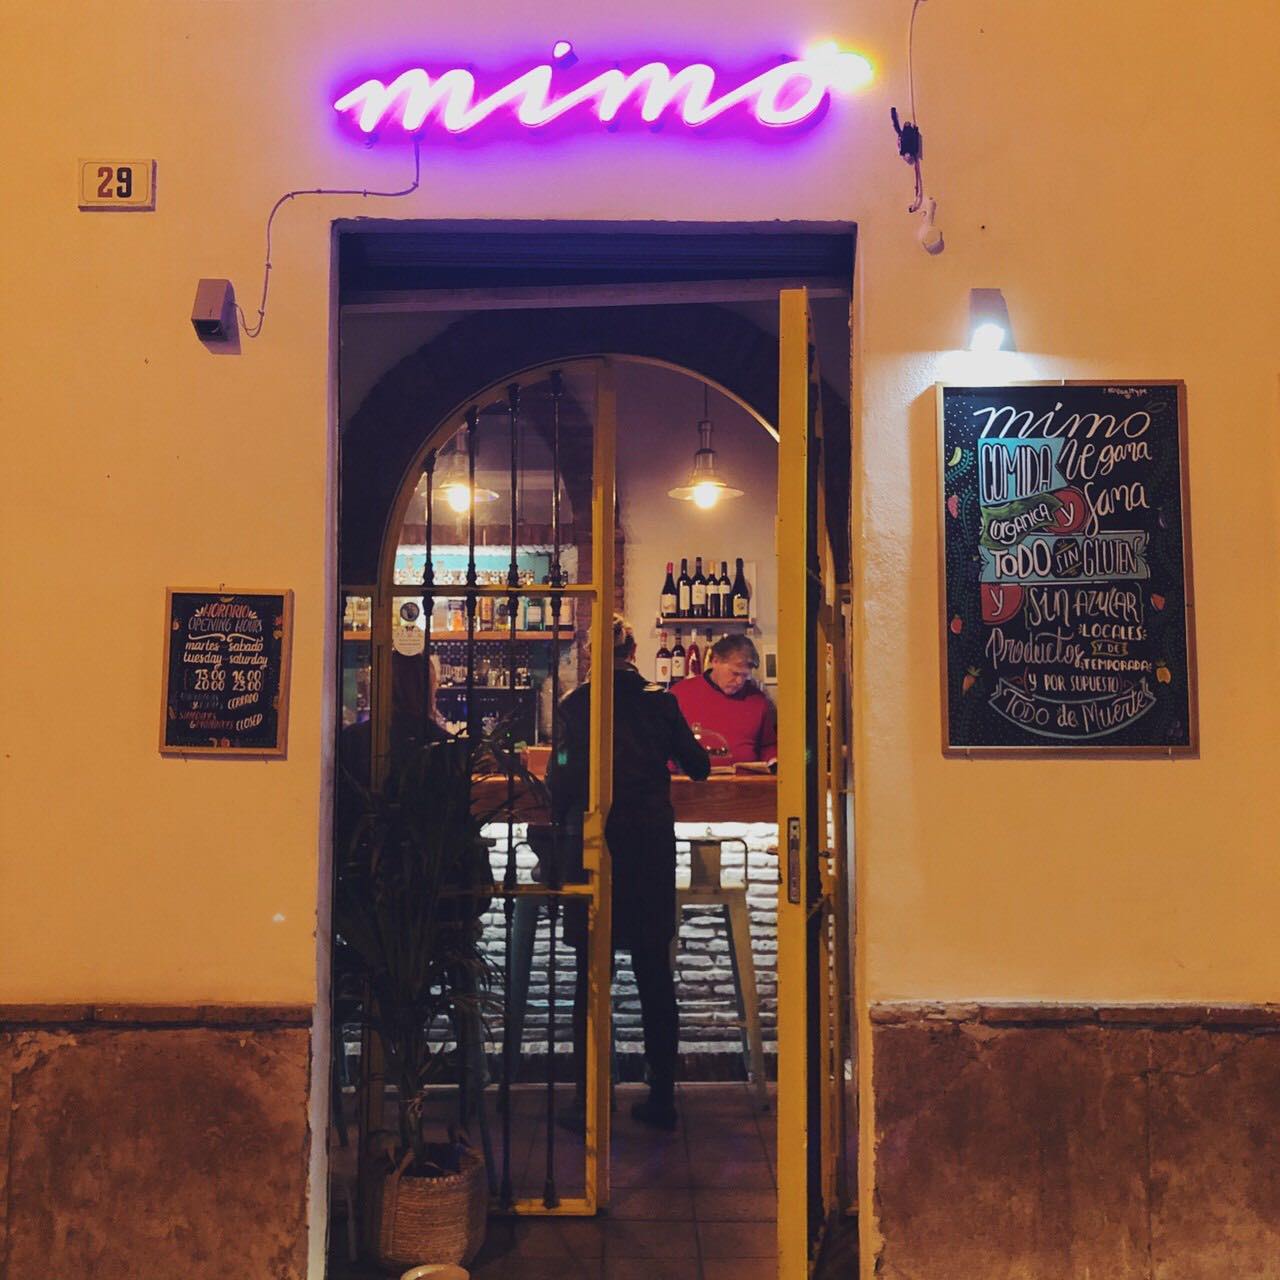 Restaurante en Málaga Mimo Vegan Bistro